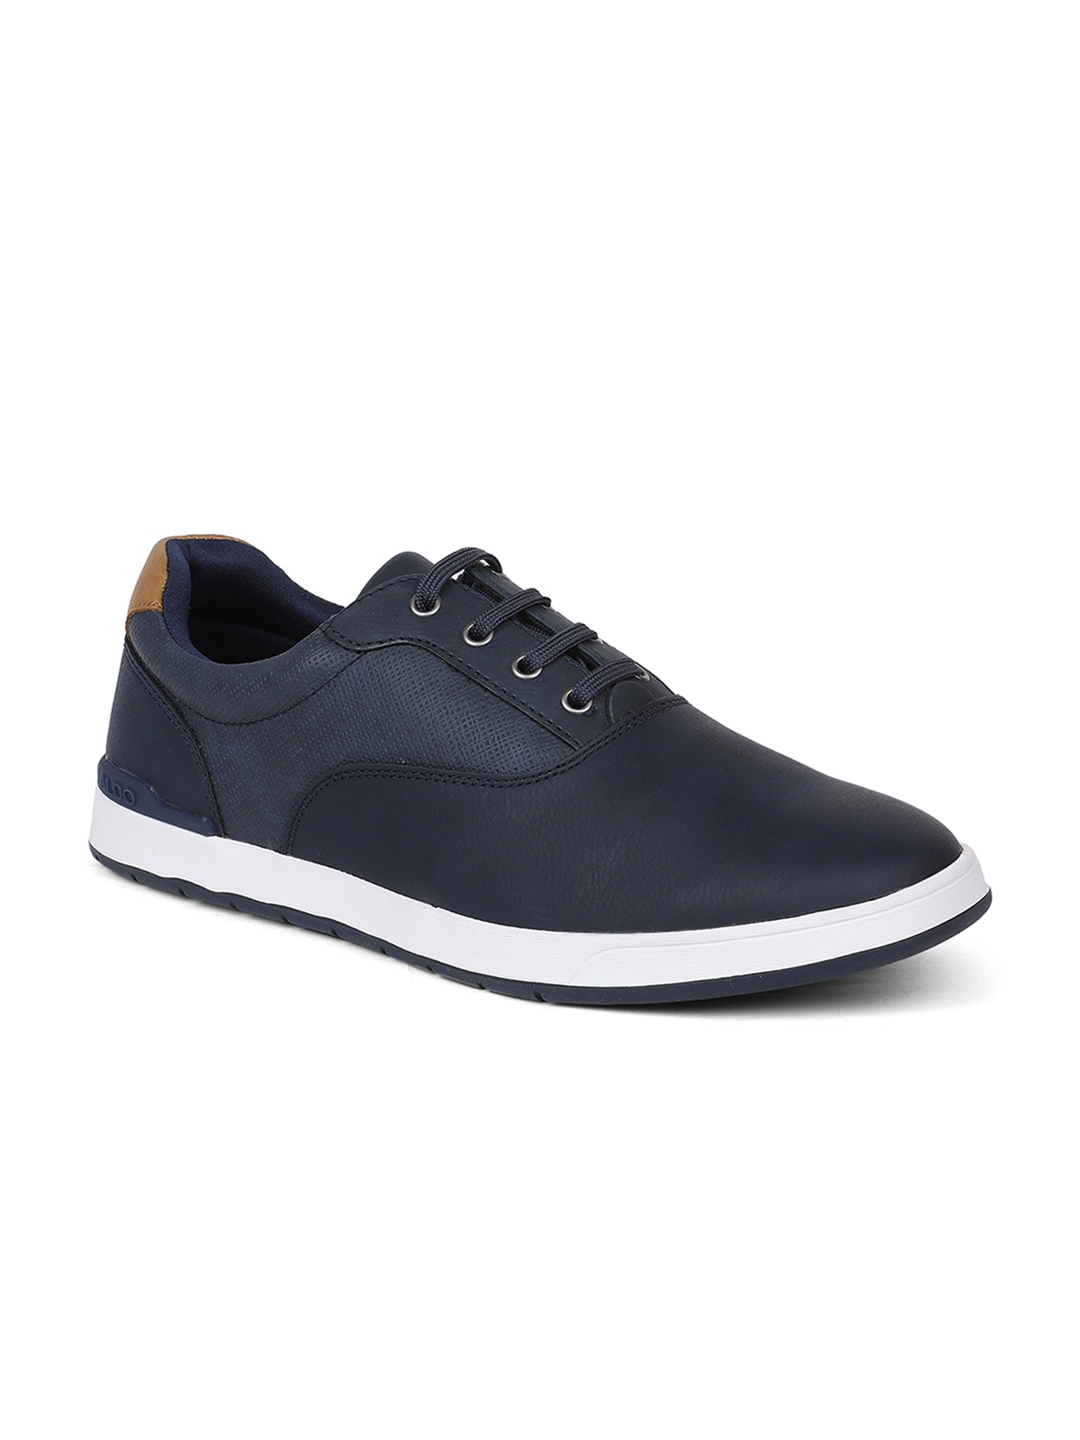 Buy Aldo Men Navy Blue Solid Sneakers Casual Shoes For Men 7769100